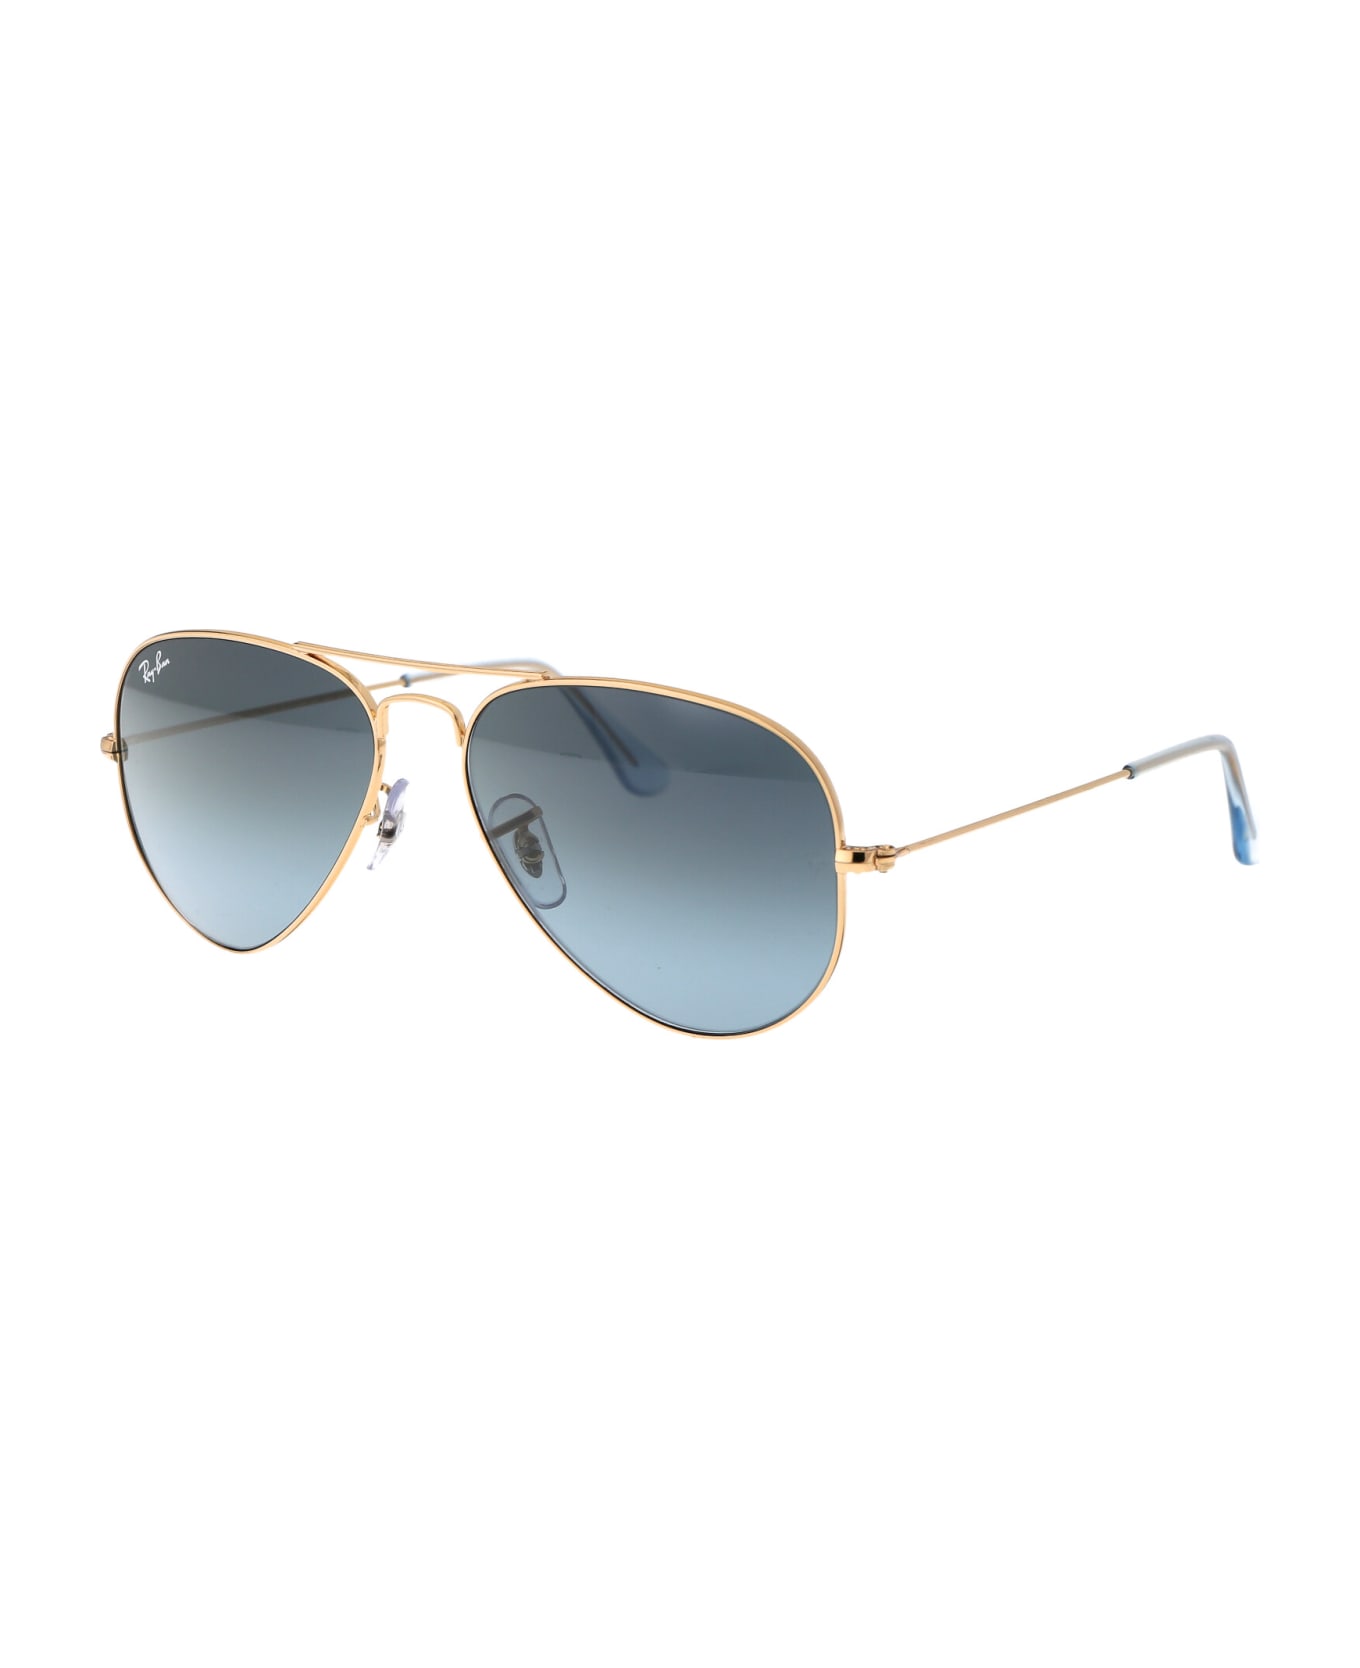 Ray-Ban Aviator Sunglasses - 001/3M GOLD サングラス